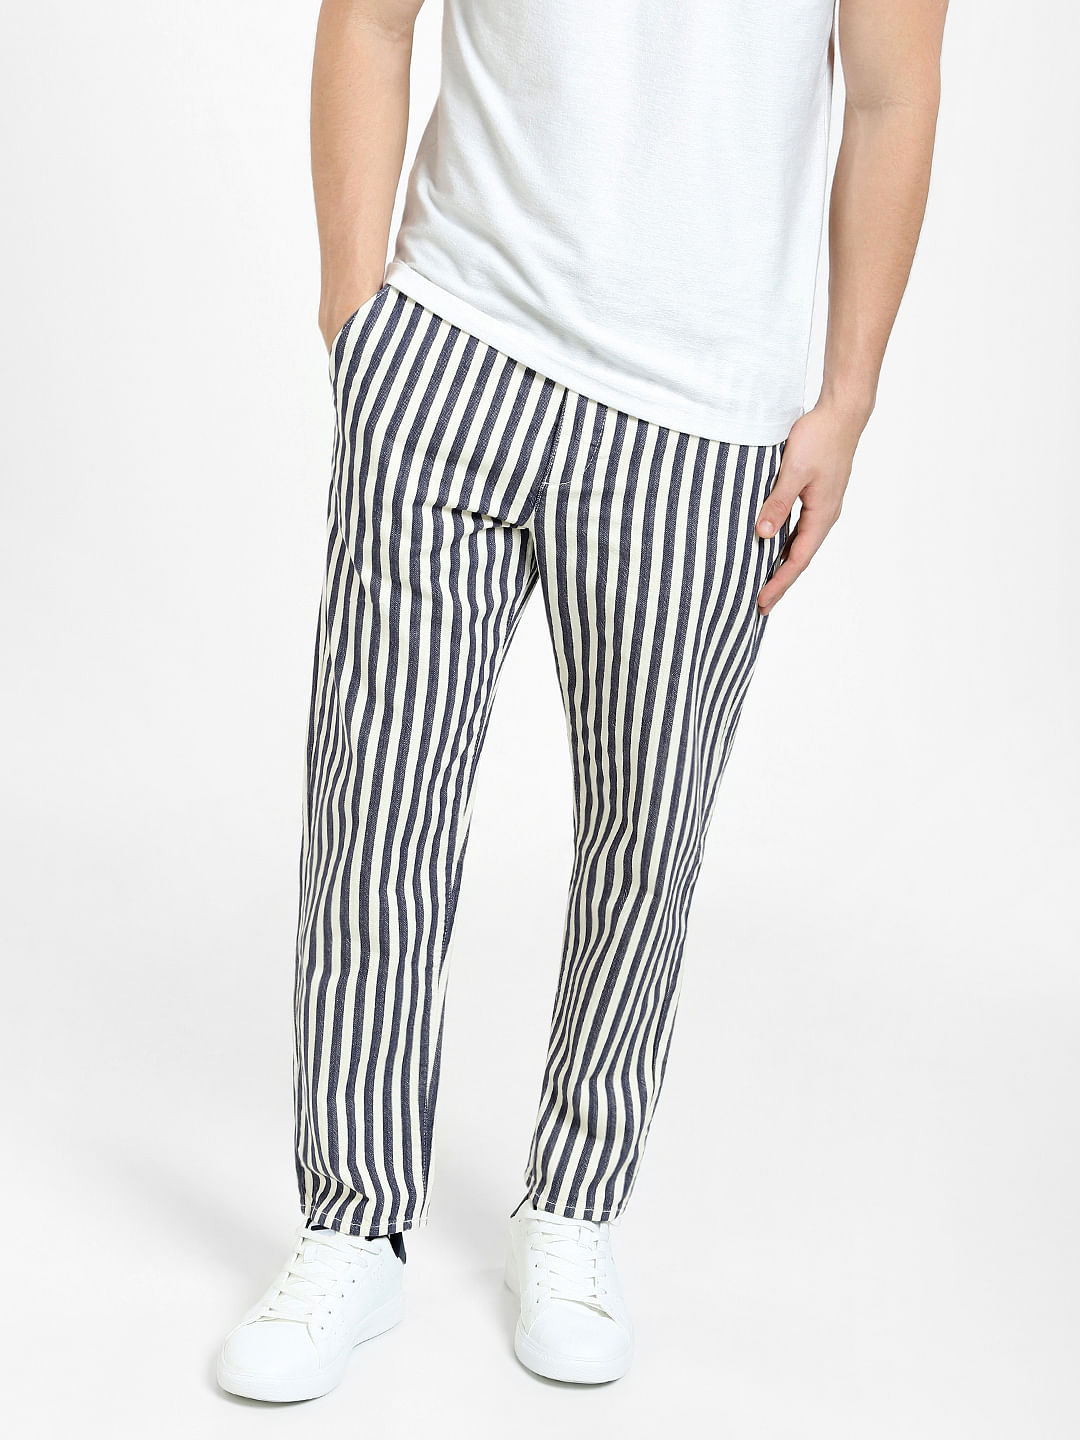 Mens Bell Bottoms Flares Black & White Thick Stripe Striped Pants Trousers  Jeans Vintage Retro (34 Waist x 34 Leg) at Amazon Men's Clothing store